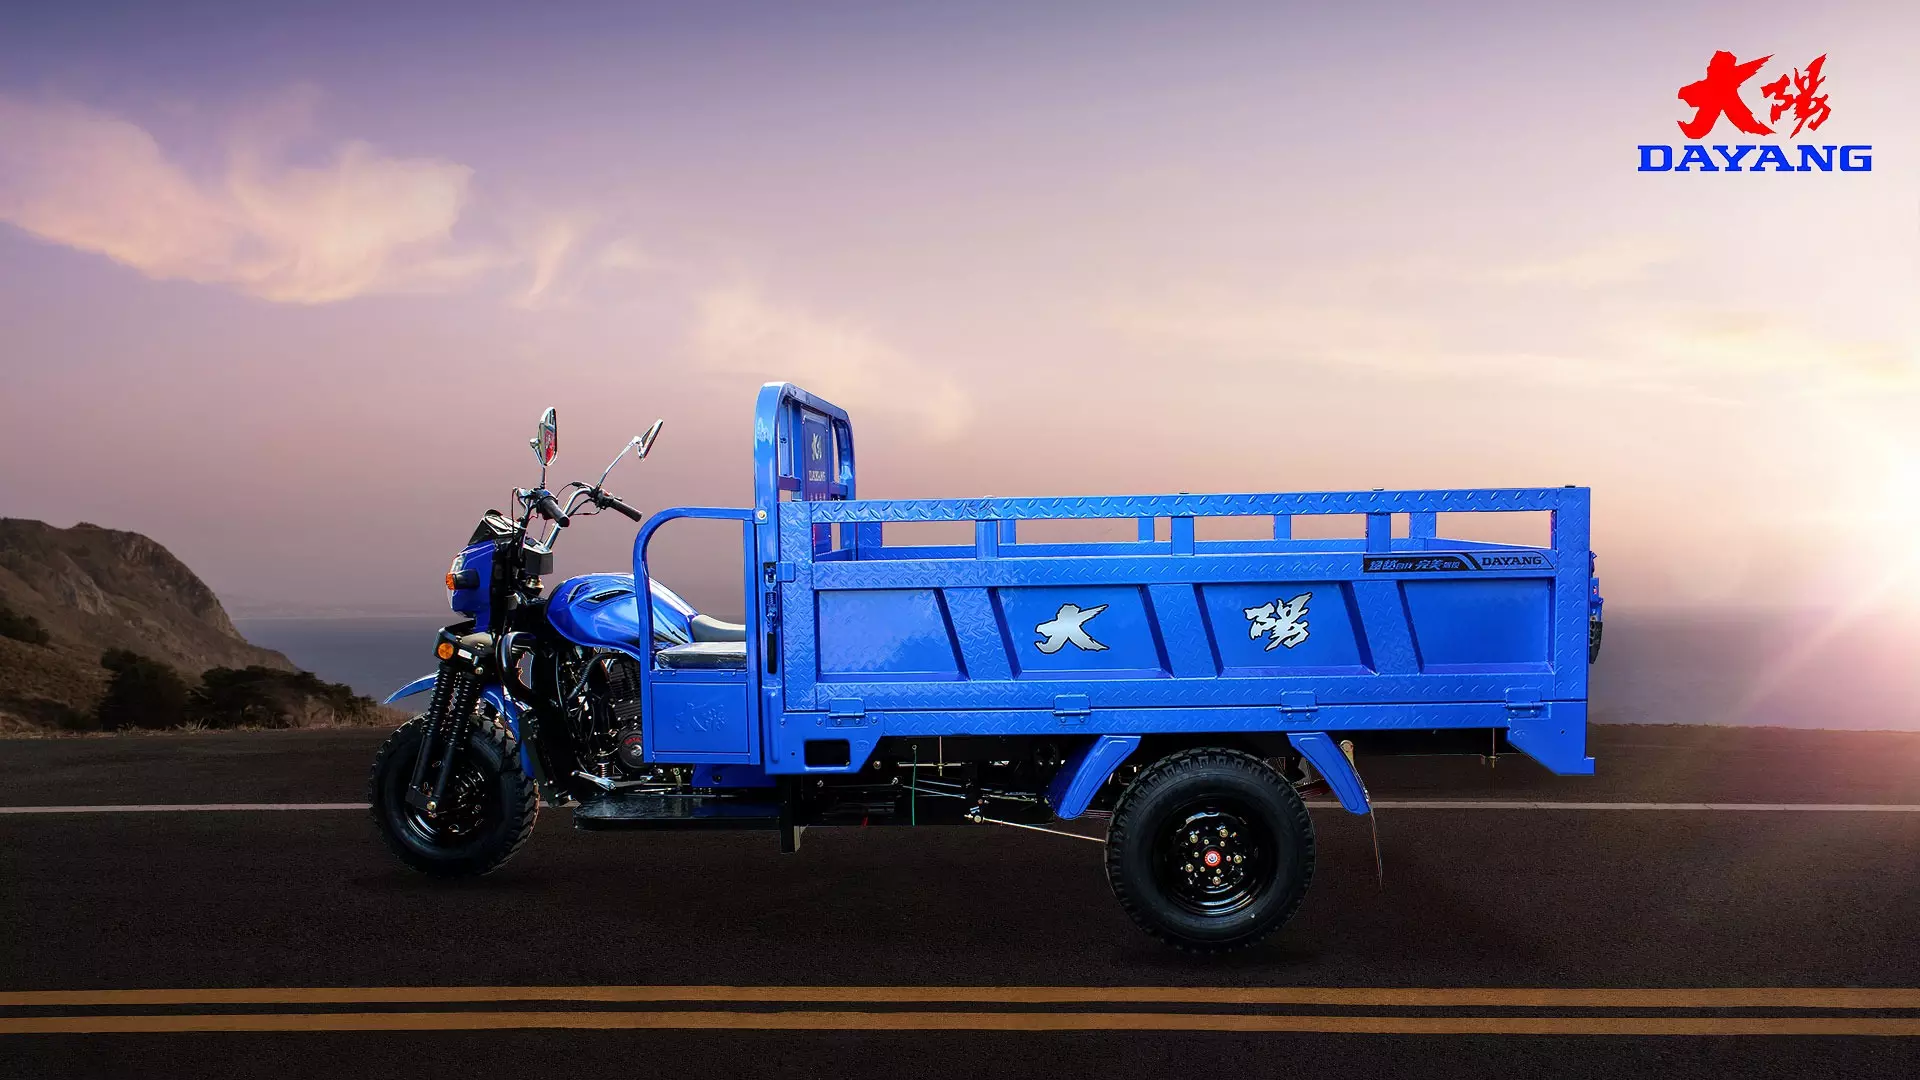 Africa hot sale super farm cargo loader powerful petrol gasoline 250cc tricycle cargo bike philippines